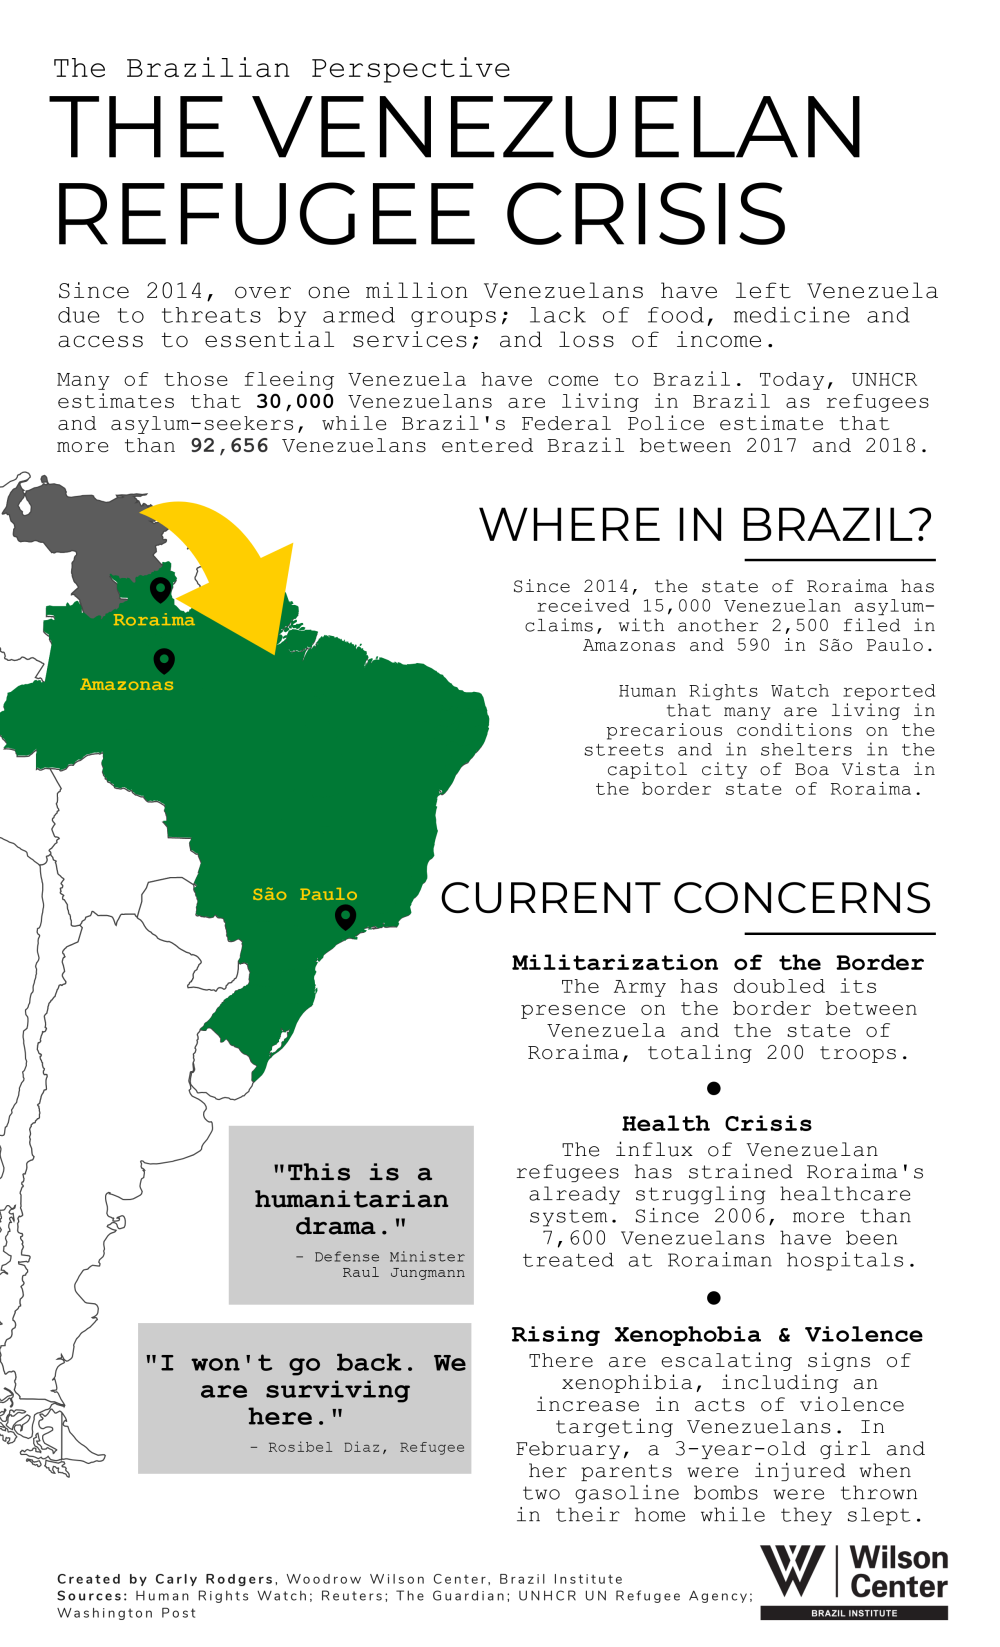 The Venezuelan Refugee Crisis - The Brazilian Perspective